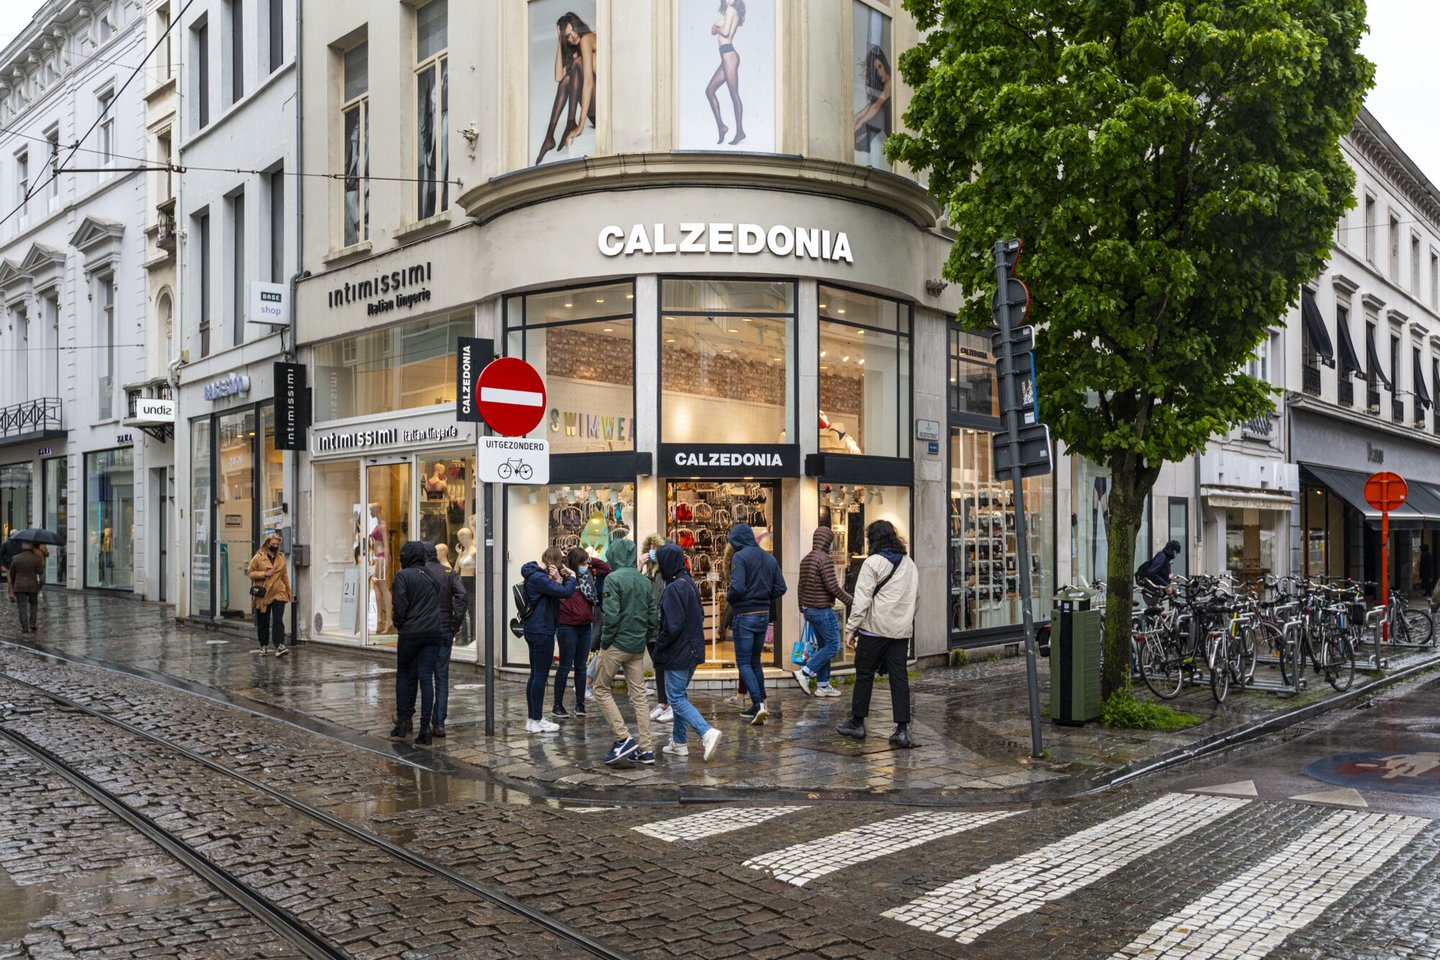 Etalage van kledingwinkel Calzedonia in Gent